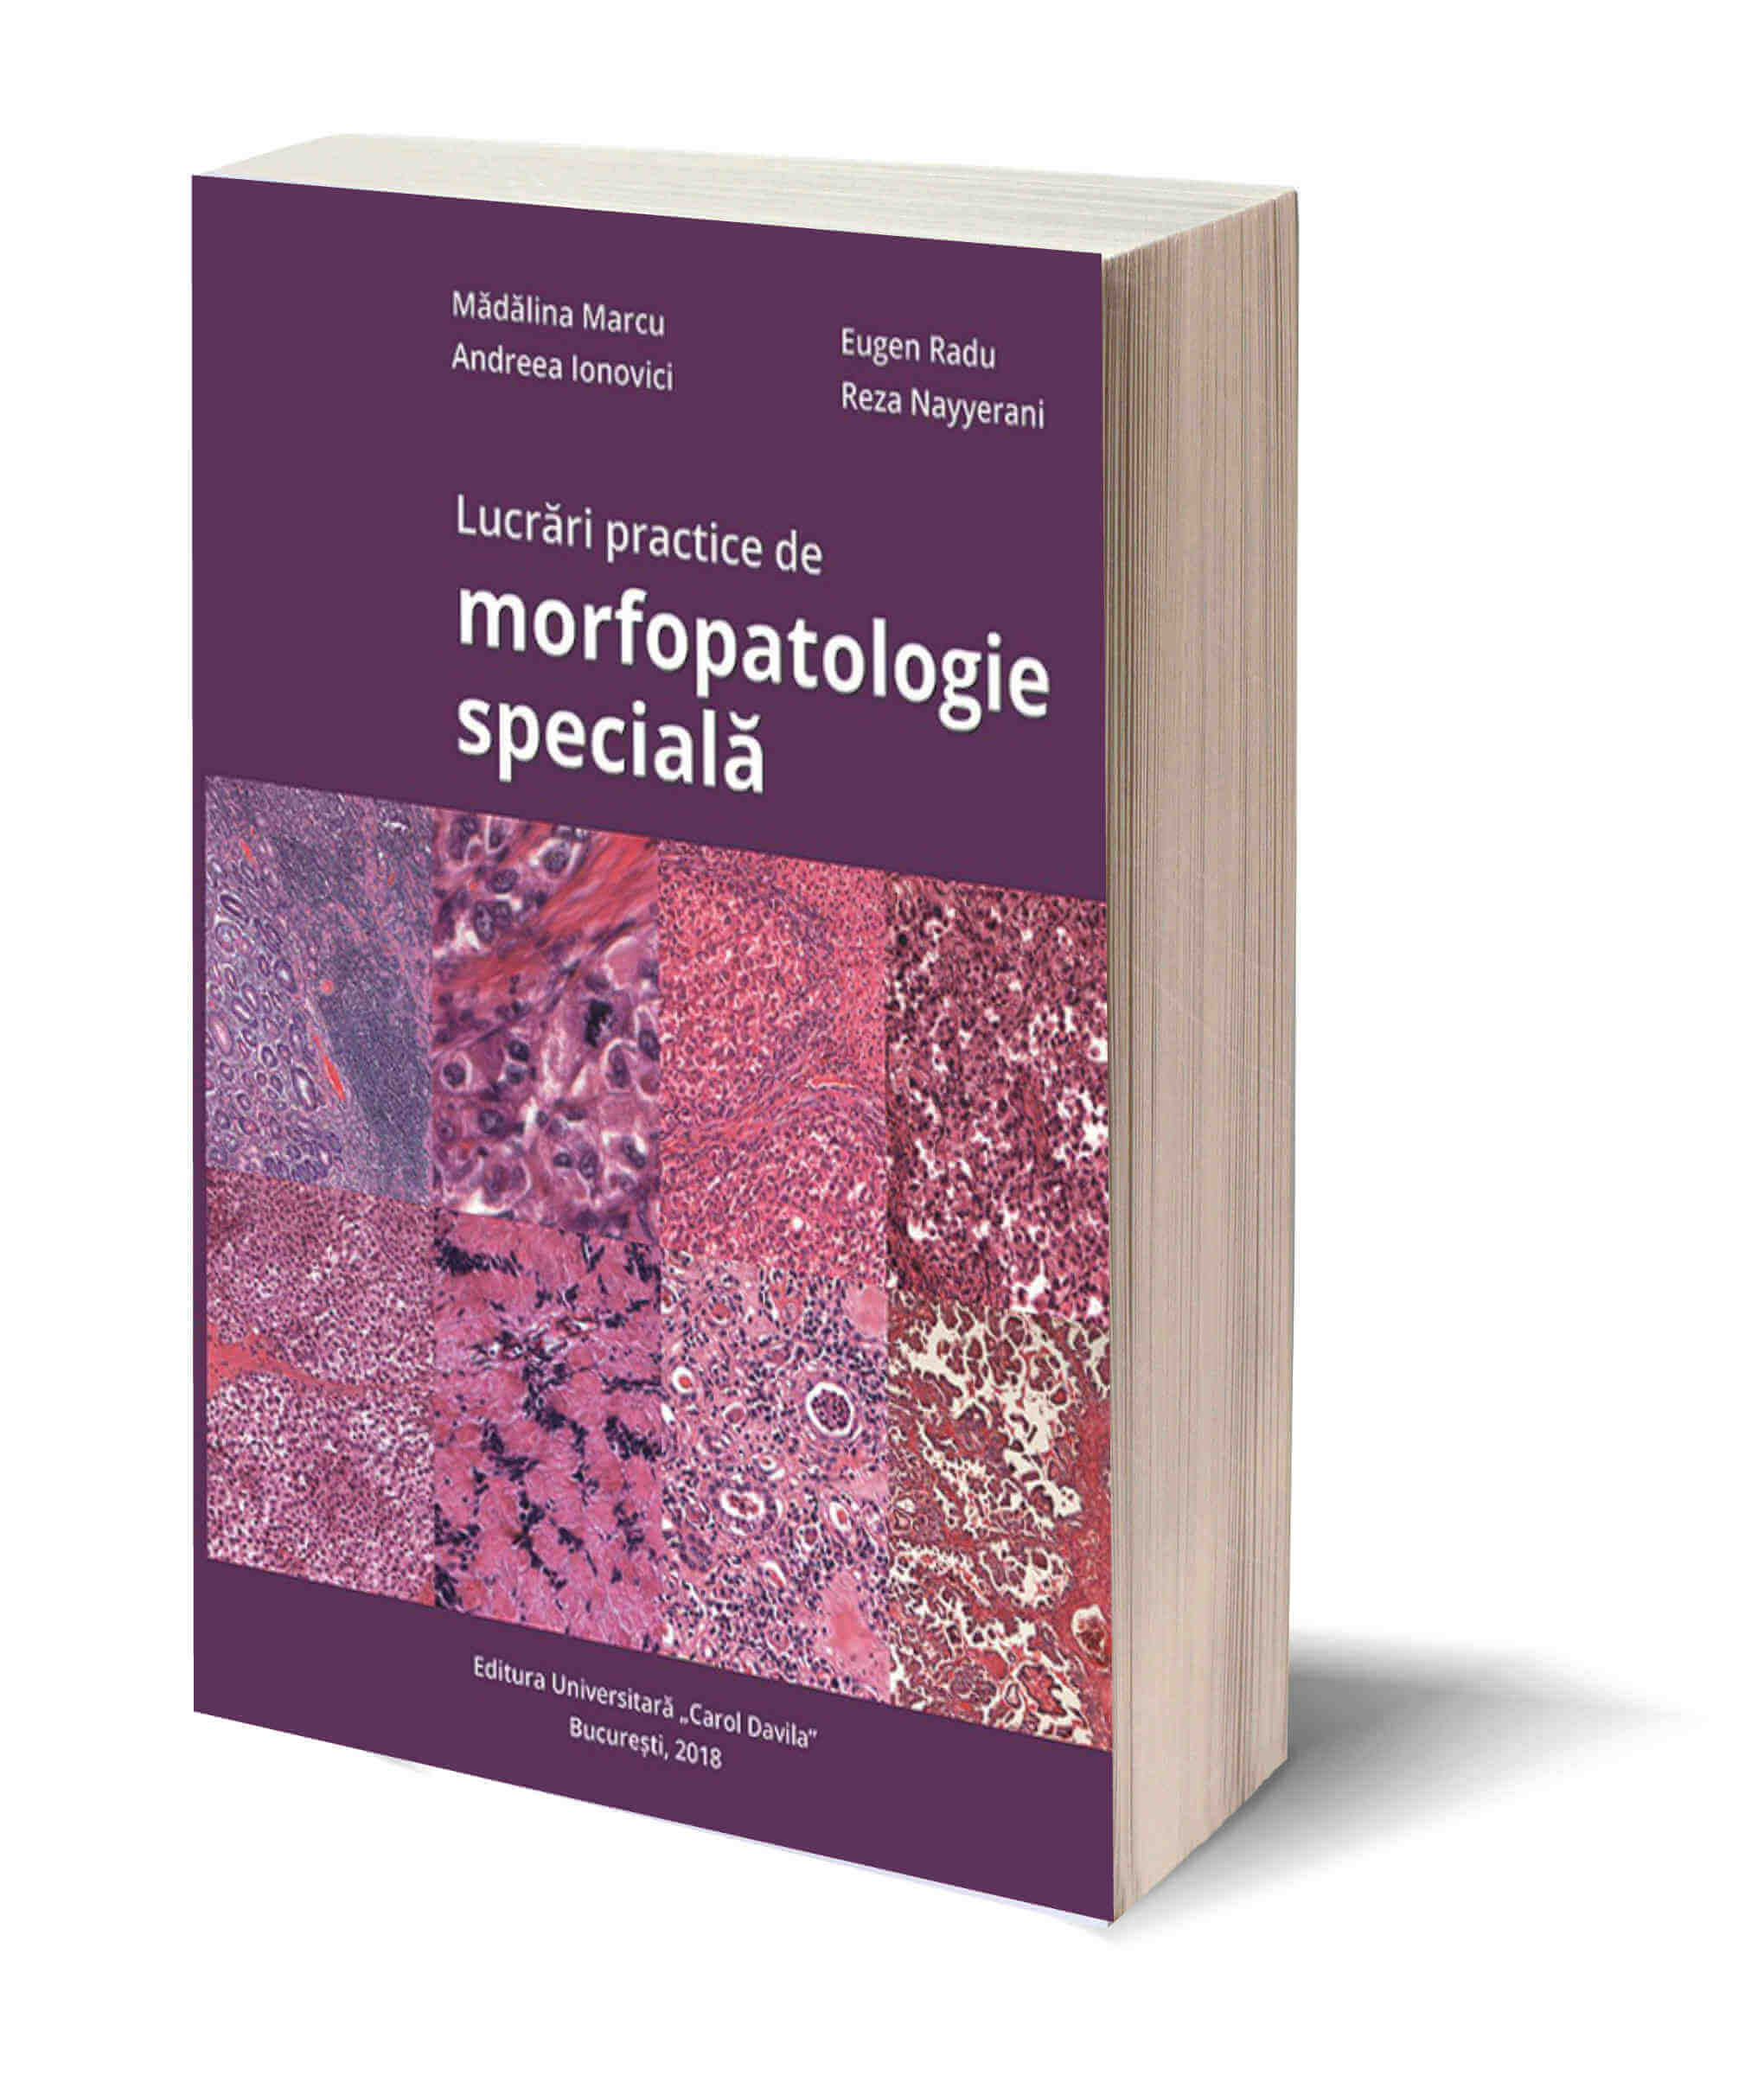 Lucrari practice de morfopatologie speciala